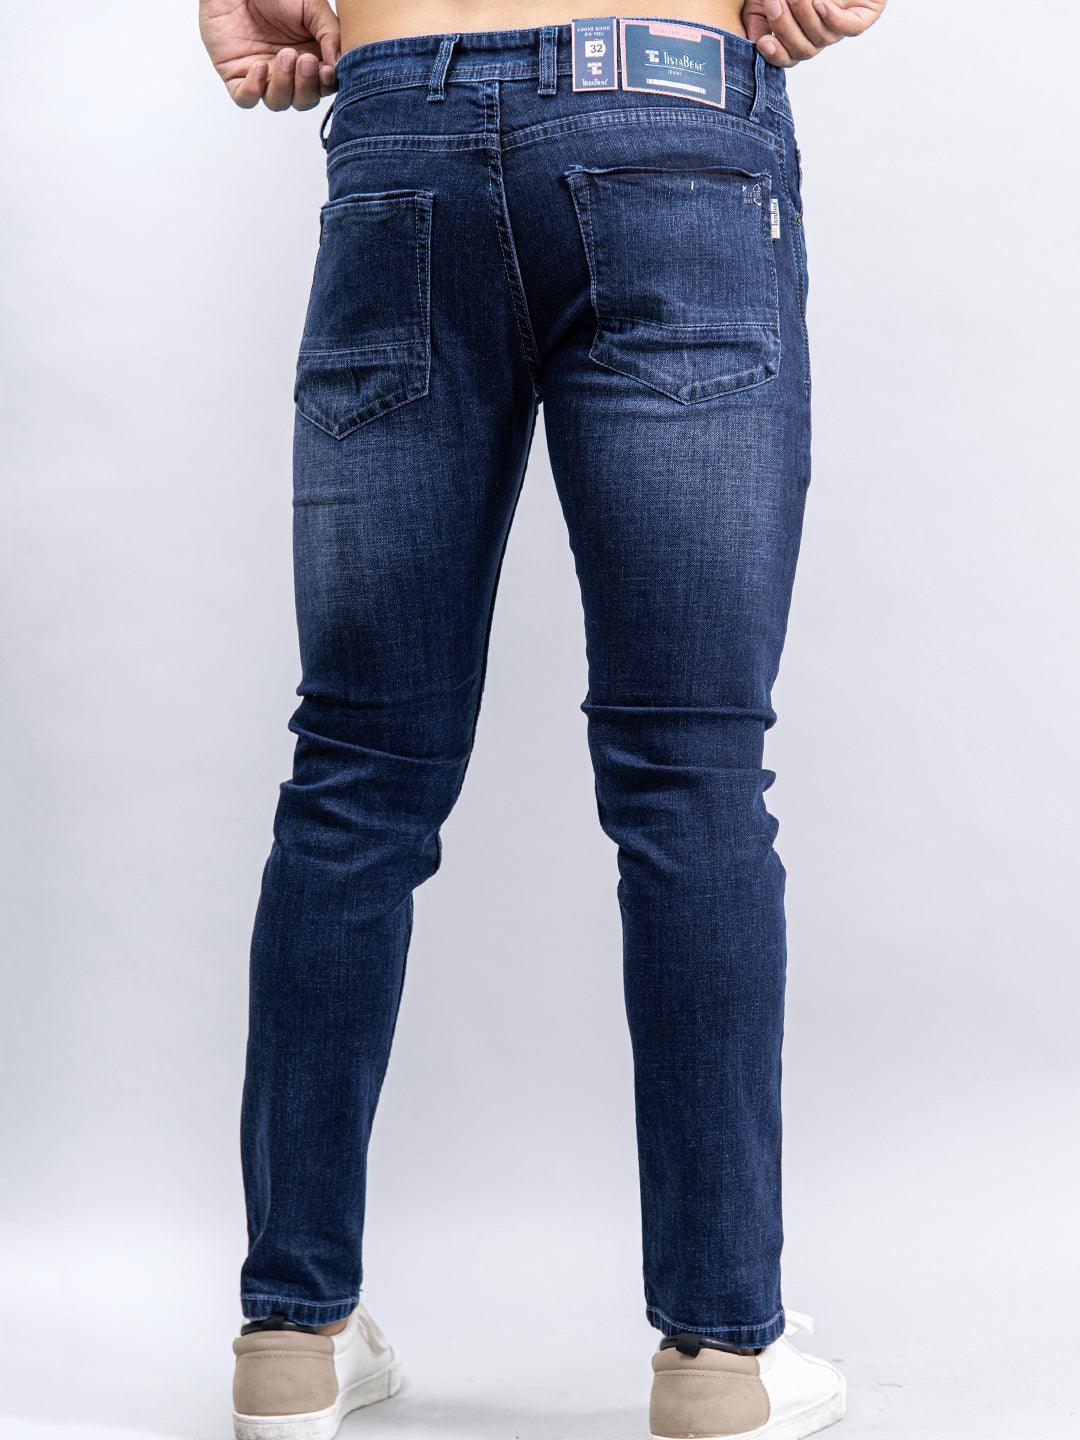 LMTD Relaxed fit jeans - dark blue denim/dark-blue denim - Zalando.de